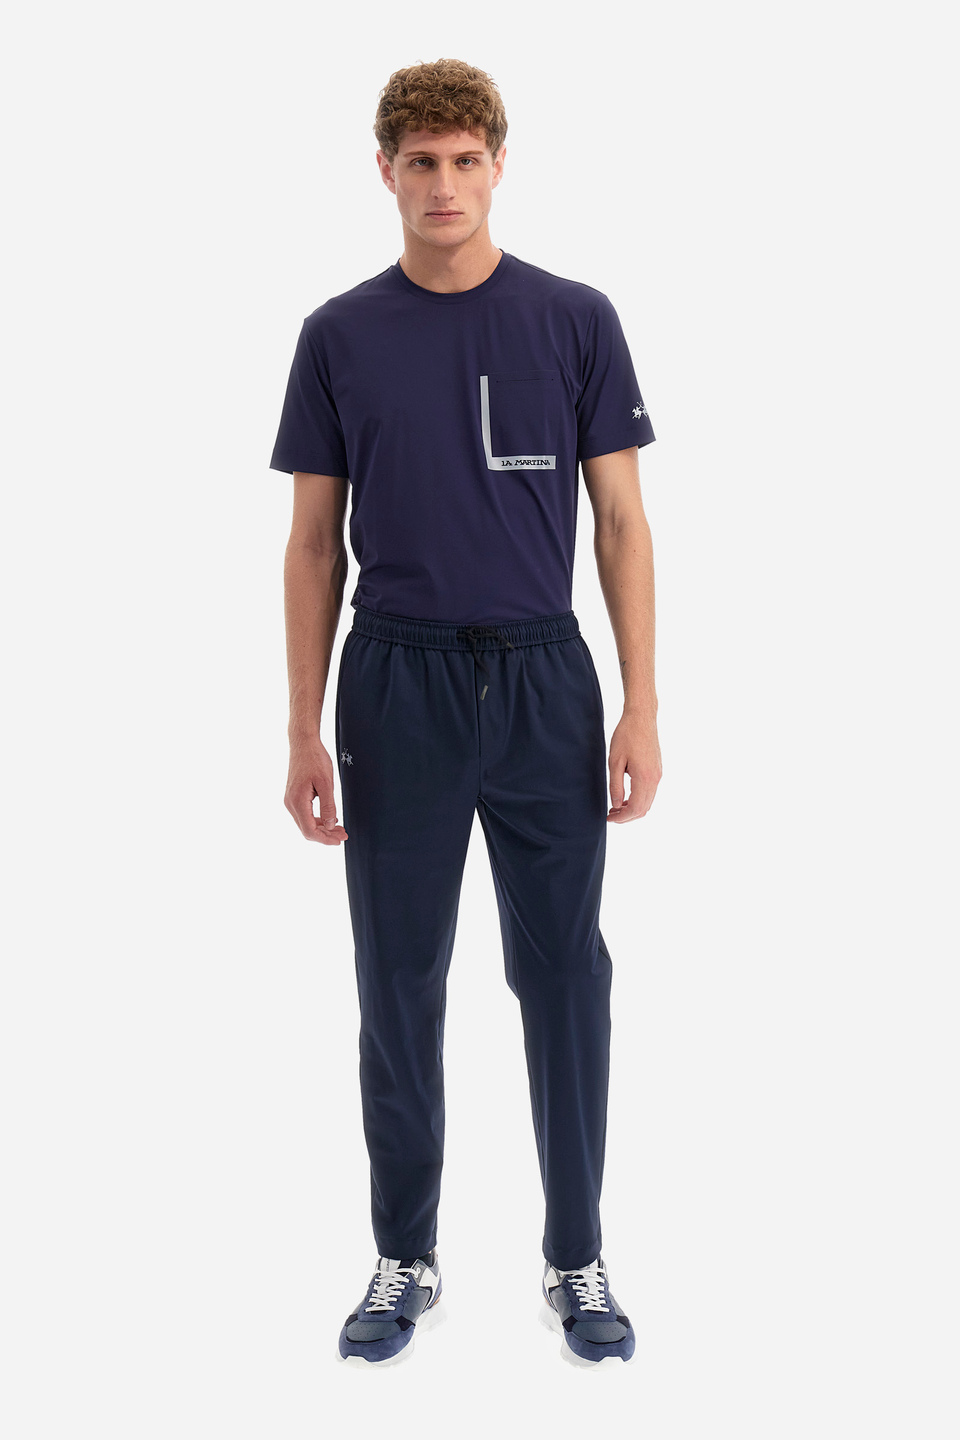 Pantalone jogging regular fit in tessuto sintetico - Yovanney | La Martina - Official Online Shop